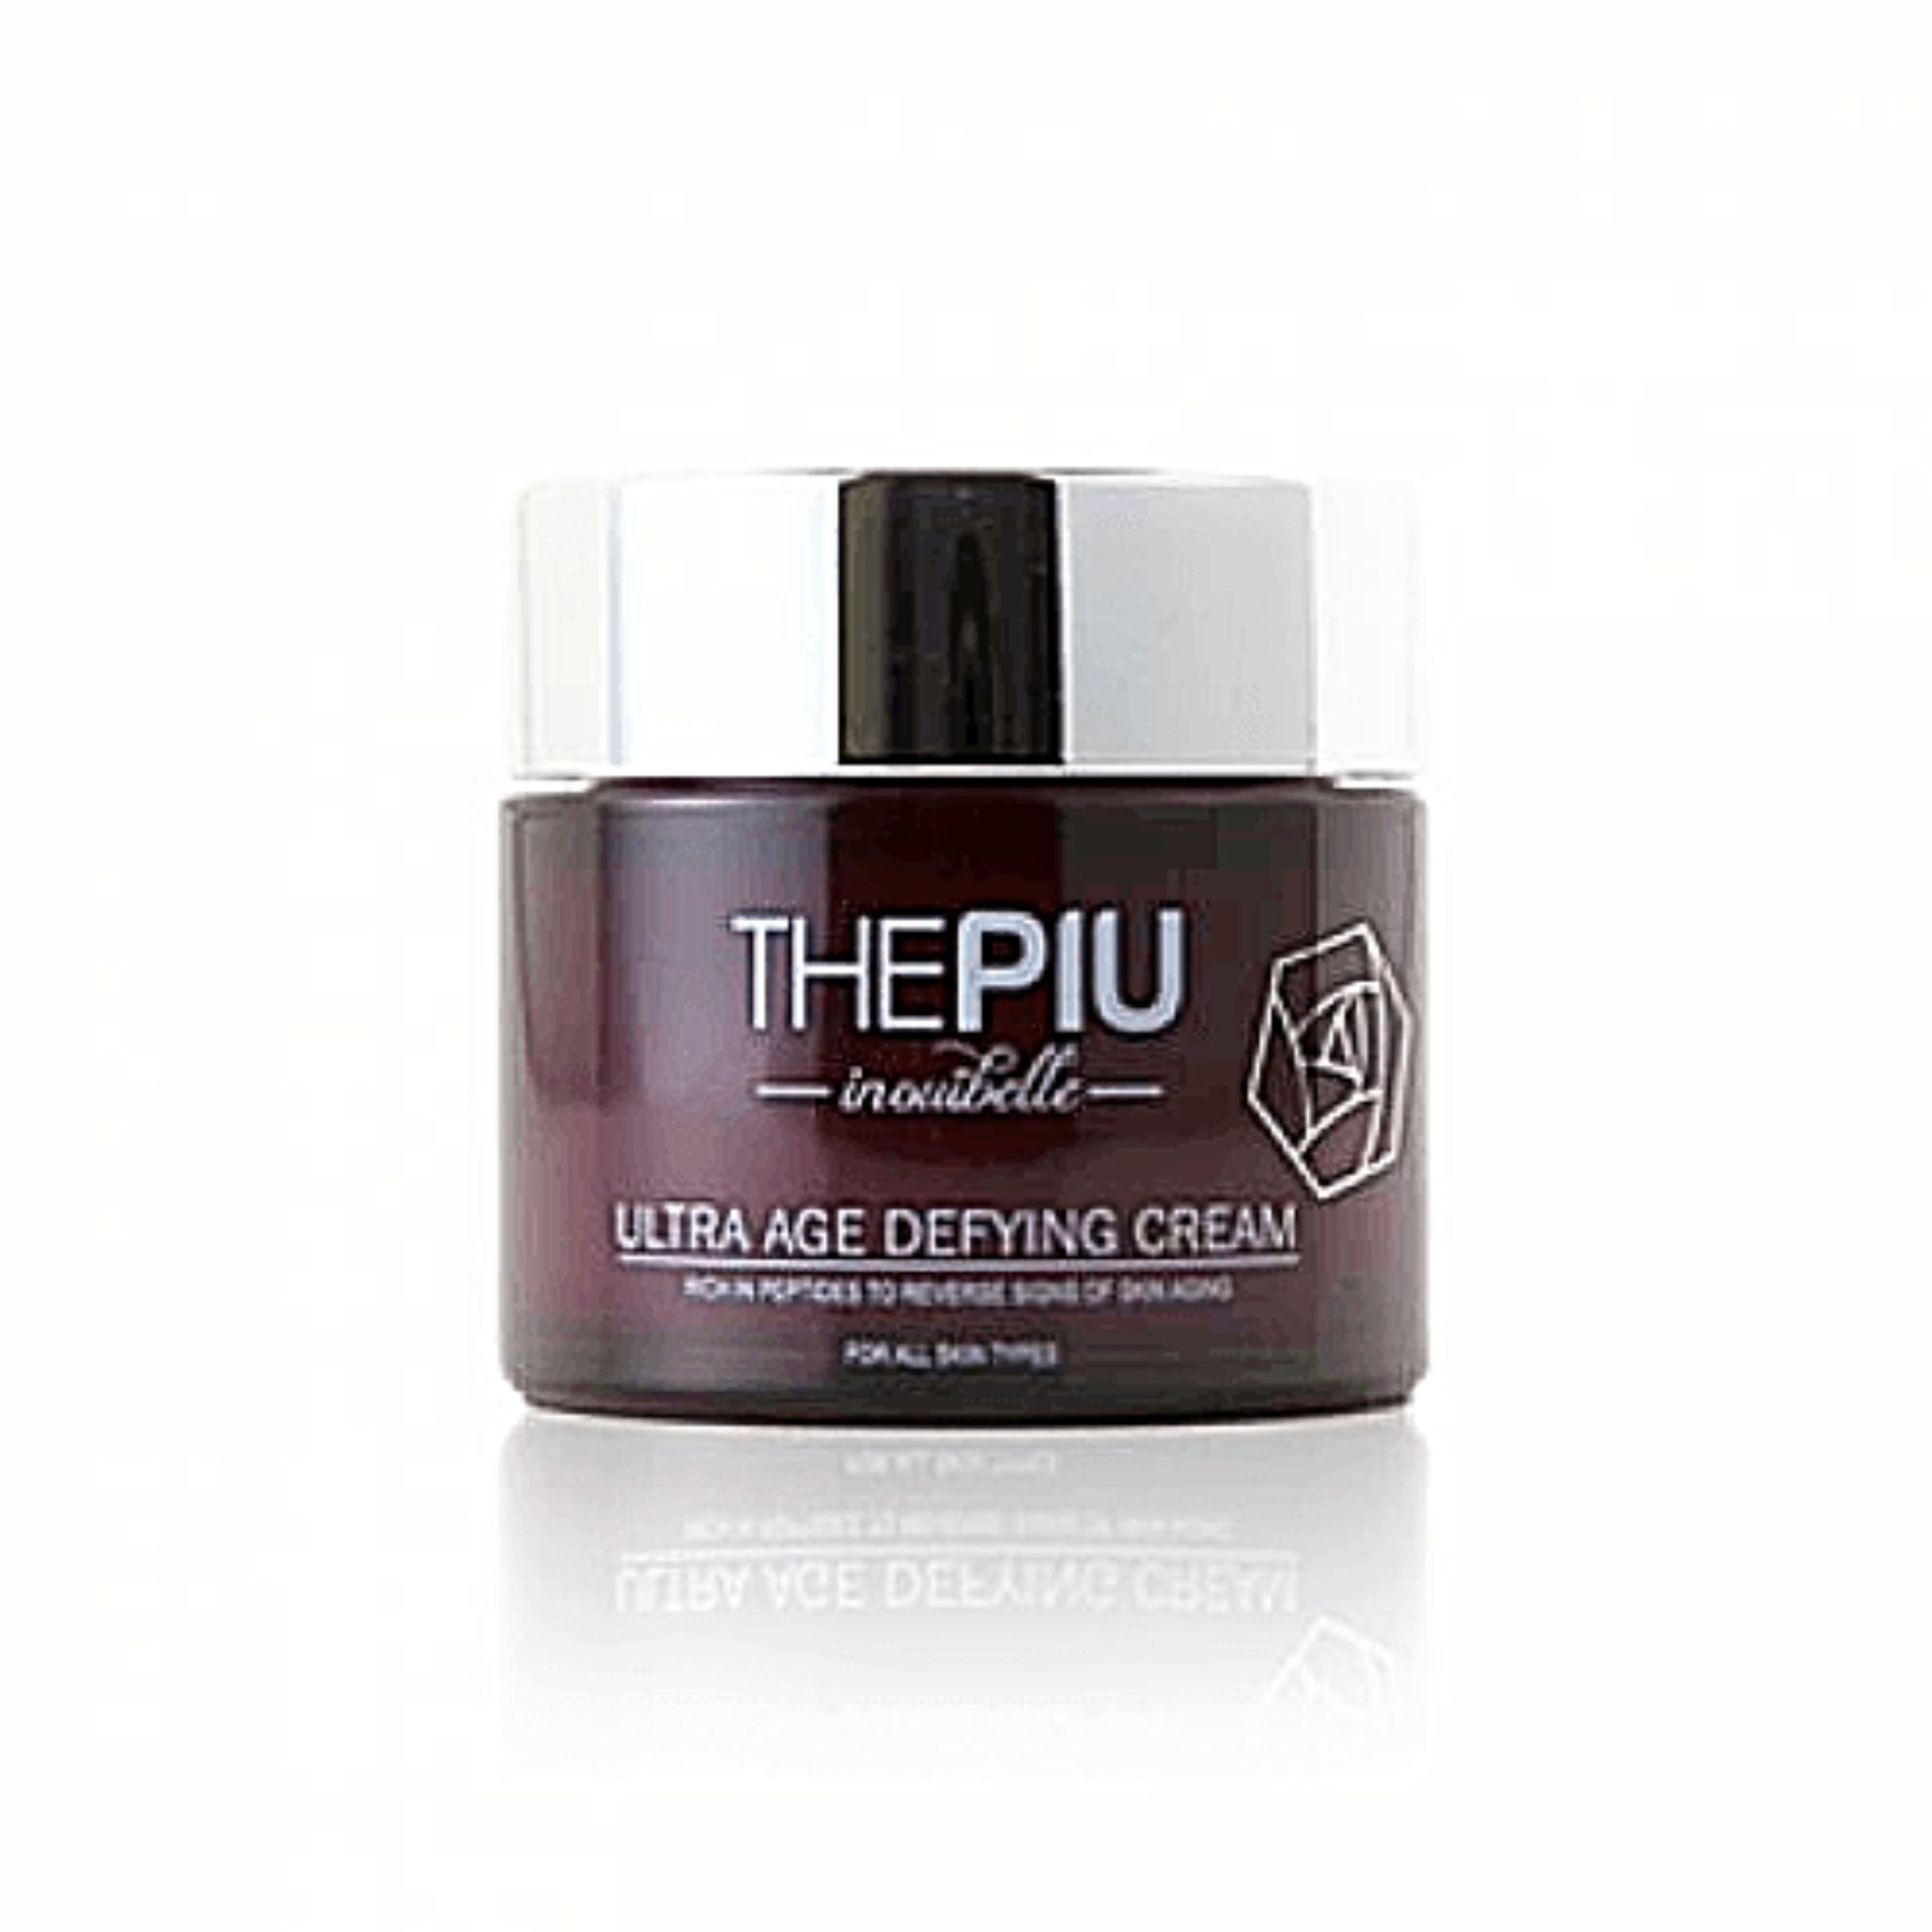 The Piu - Ultra Age Defying Cream